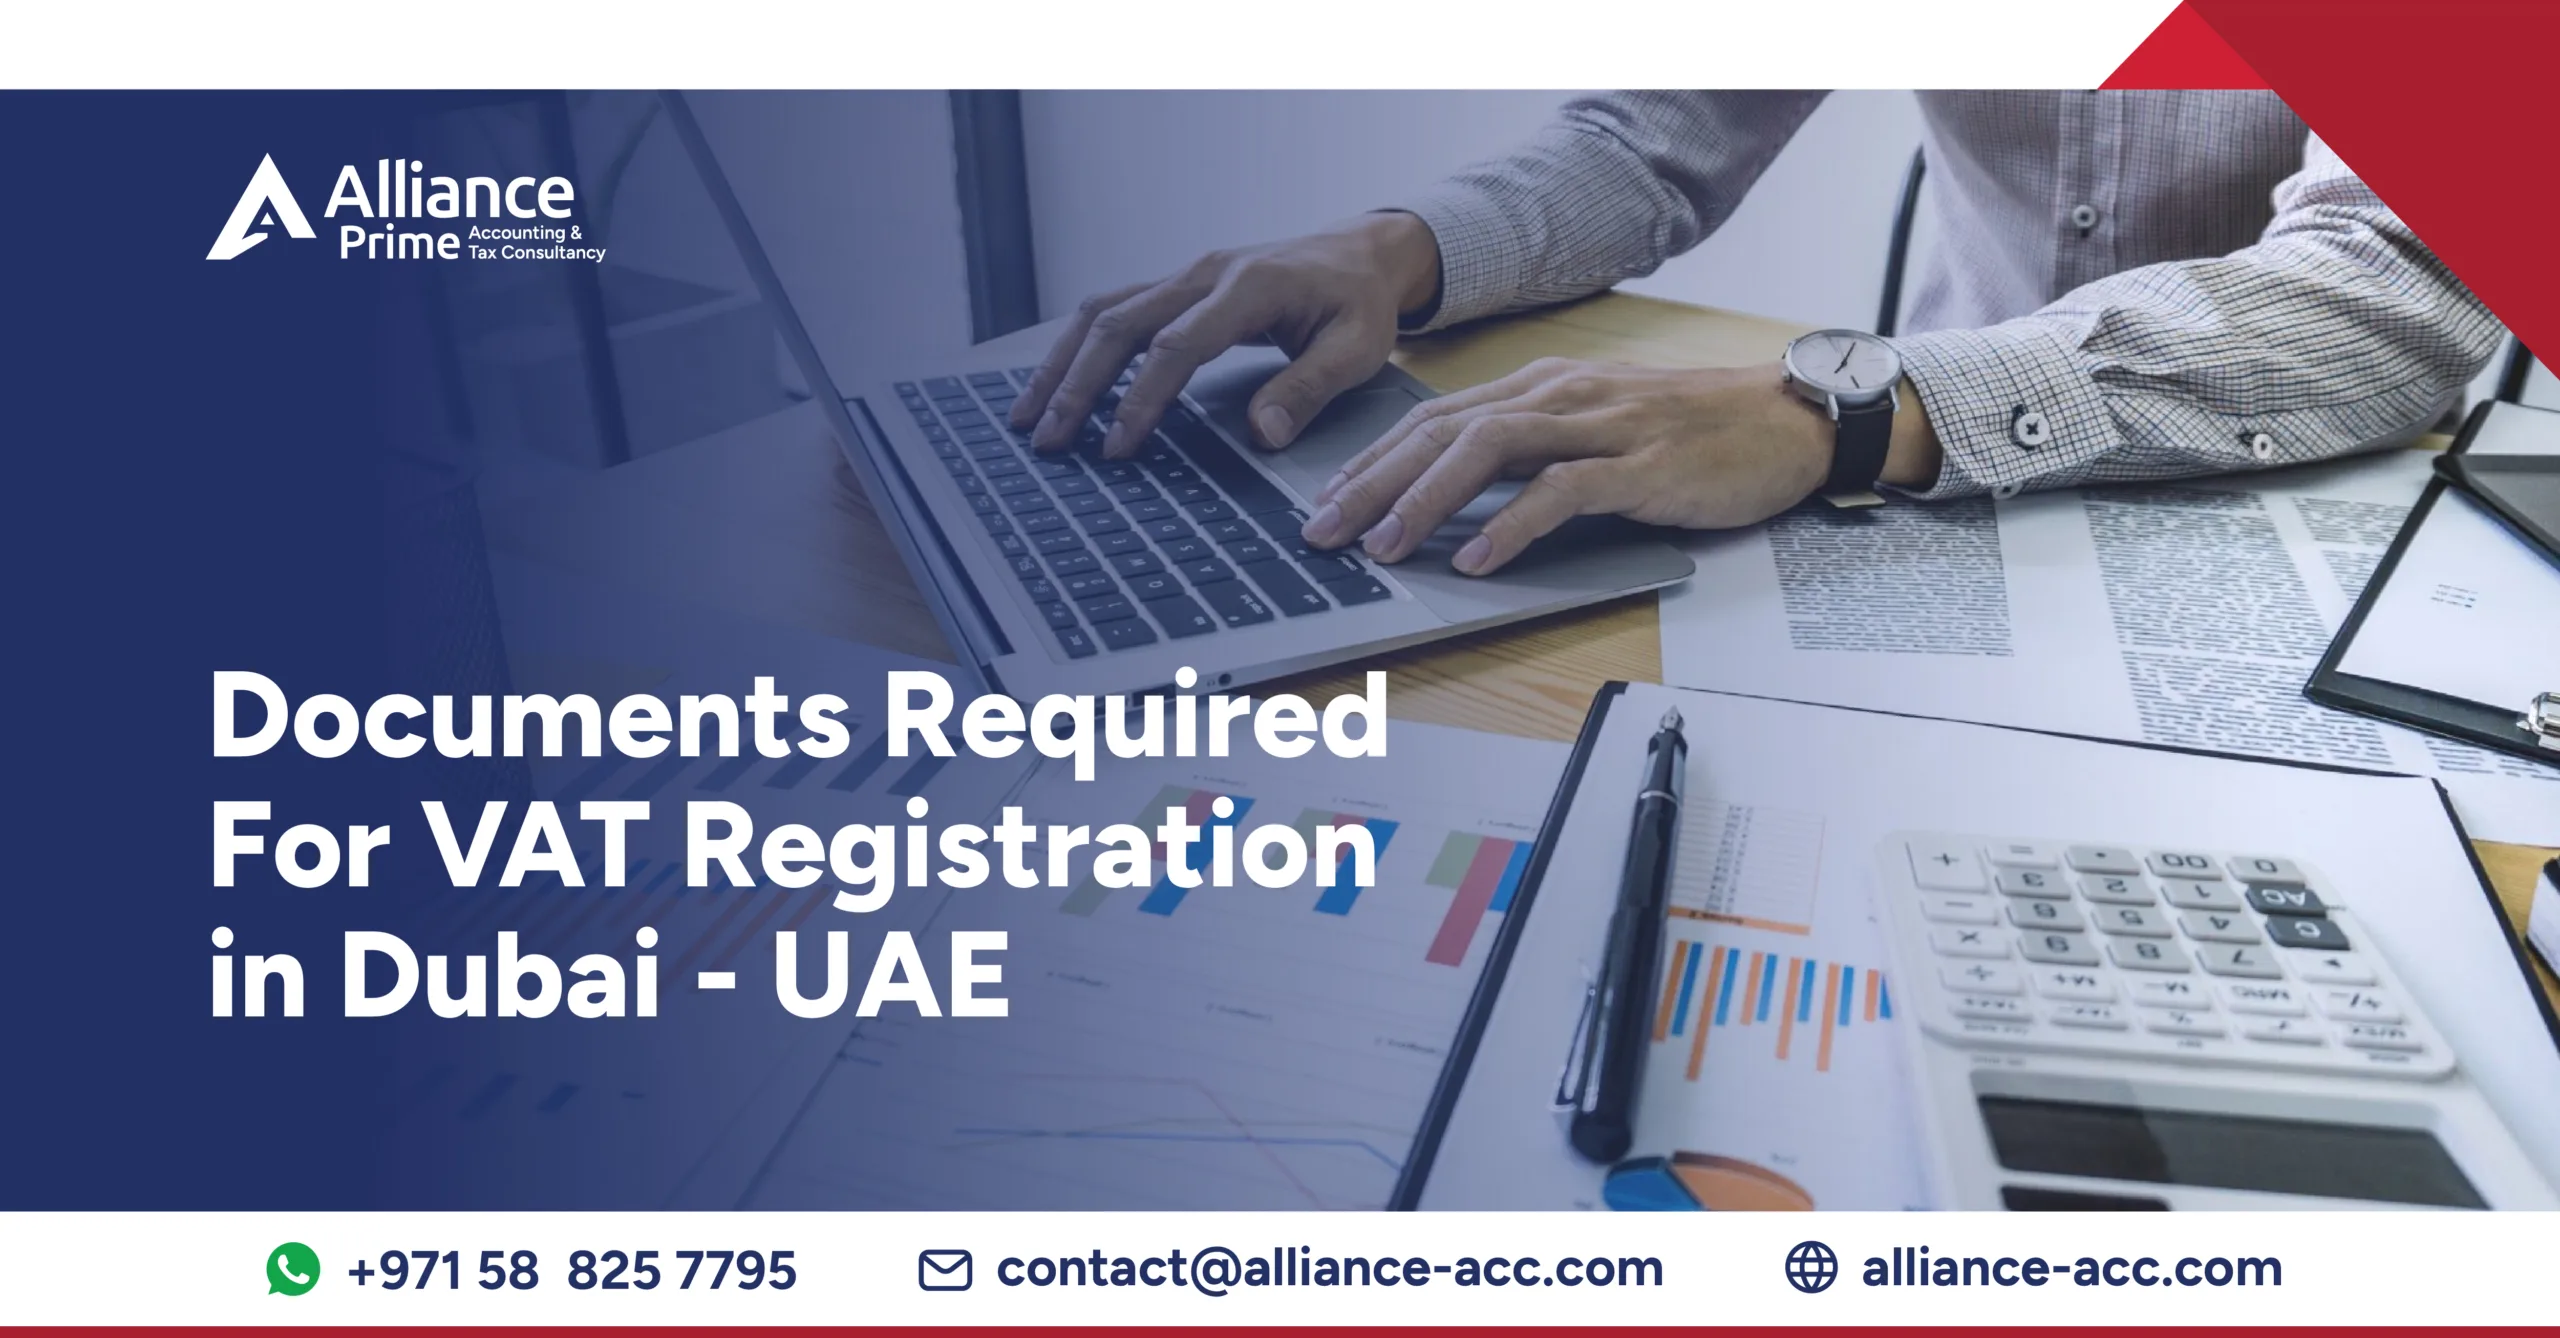 Documents Required For VAT Registration in Dubai - UAE